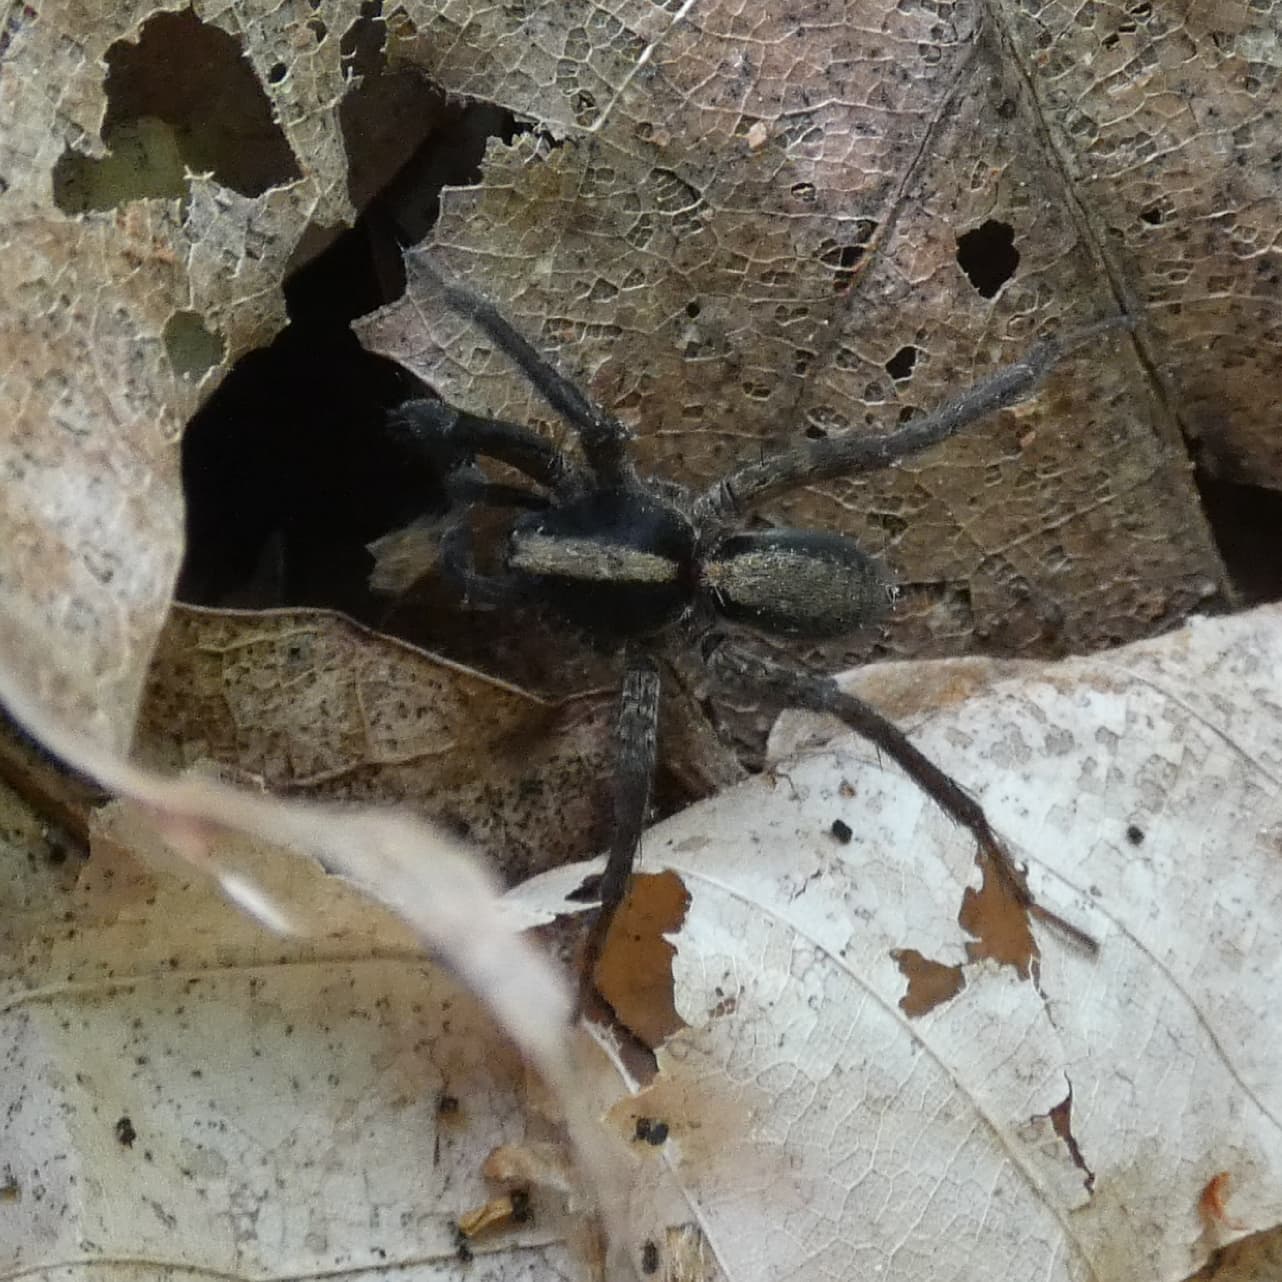 Picture of Schizocosa (Lanceolate Wolf Spiders) - Male - Dorsal